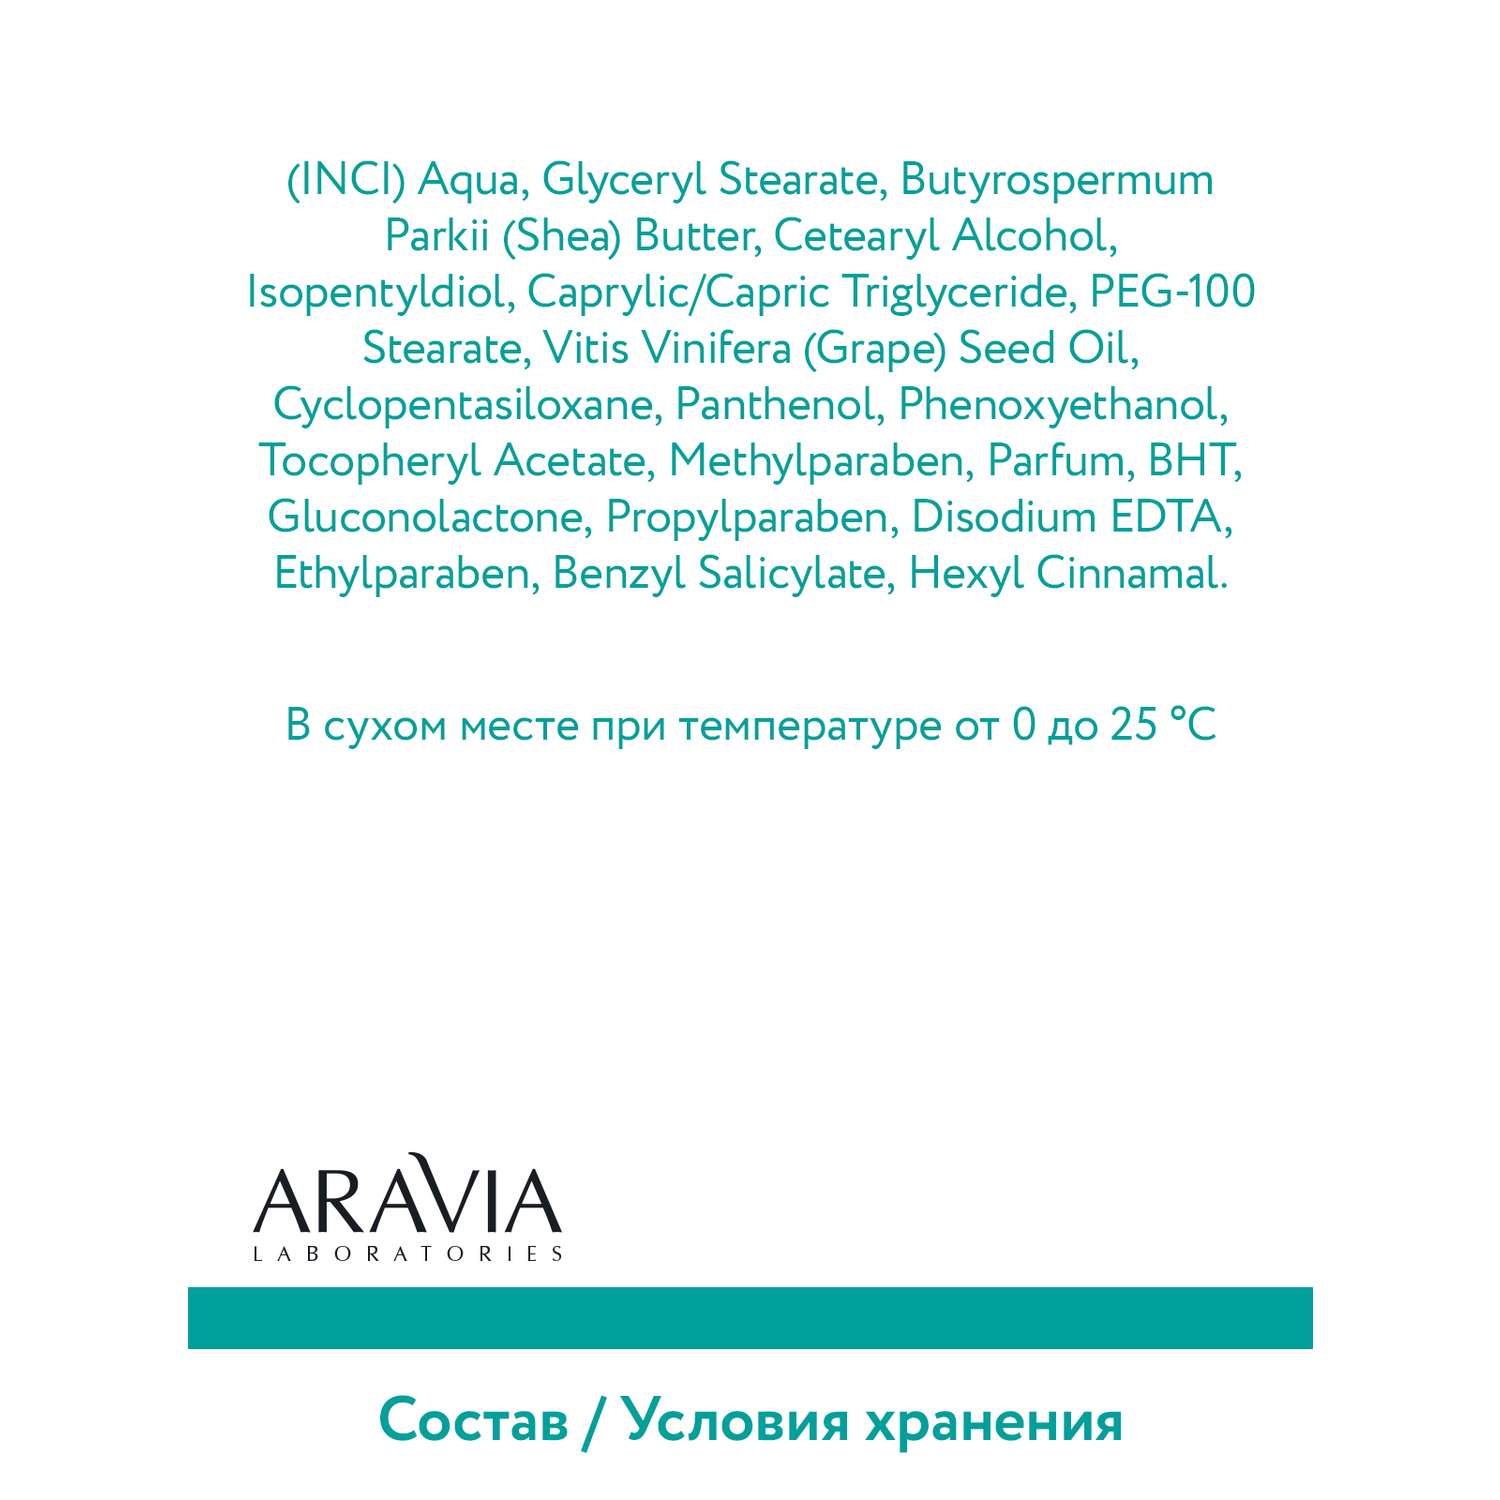 Крем для лица ARAVIA Laboratories балансирующий с РНА-кислотами PHA-Active Balance Cream 50 мл - фото 11